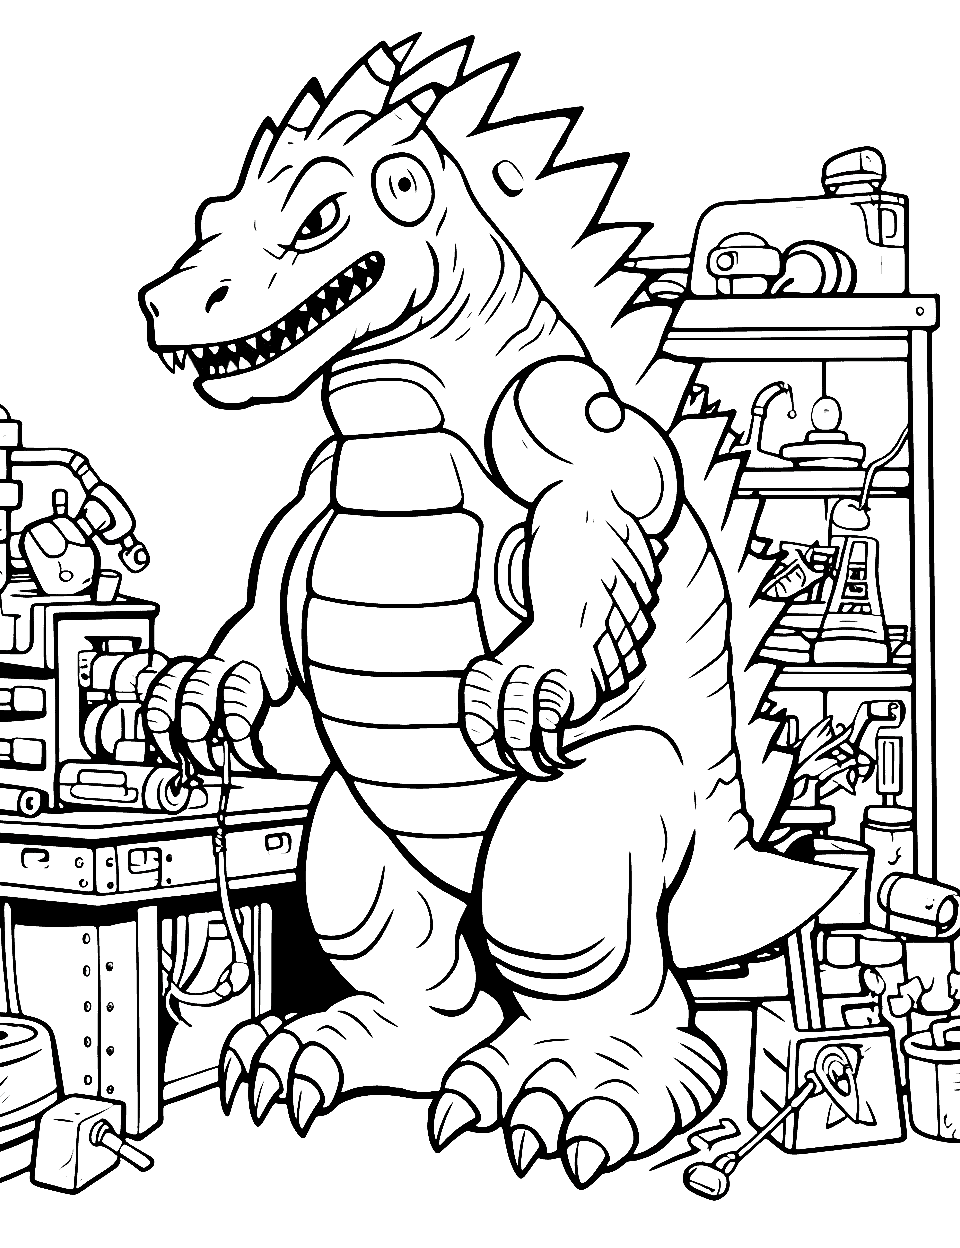 Mechagodzilla's Workshop Coloring Page - Godzilla visiting the lab where Mechagodzilla is being built.